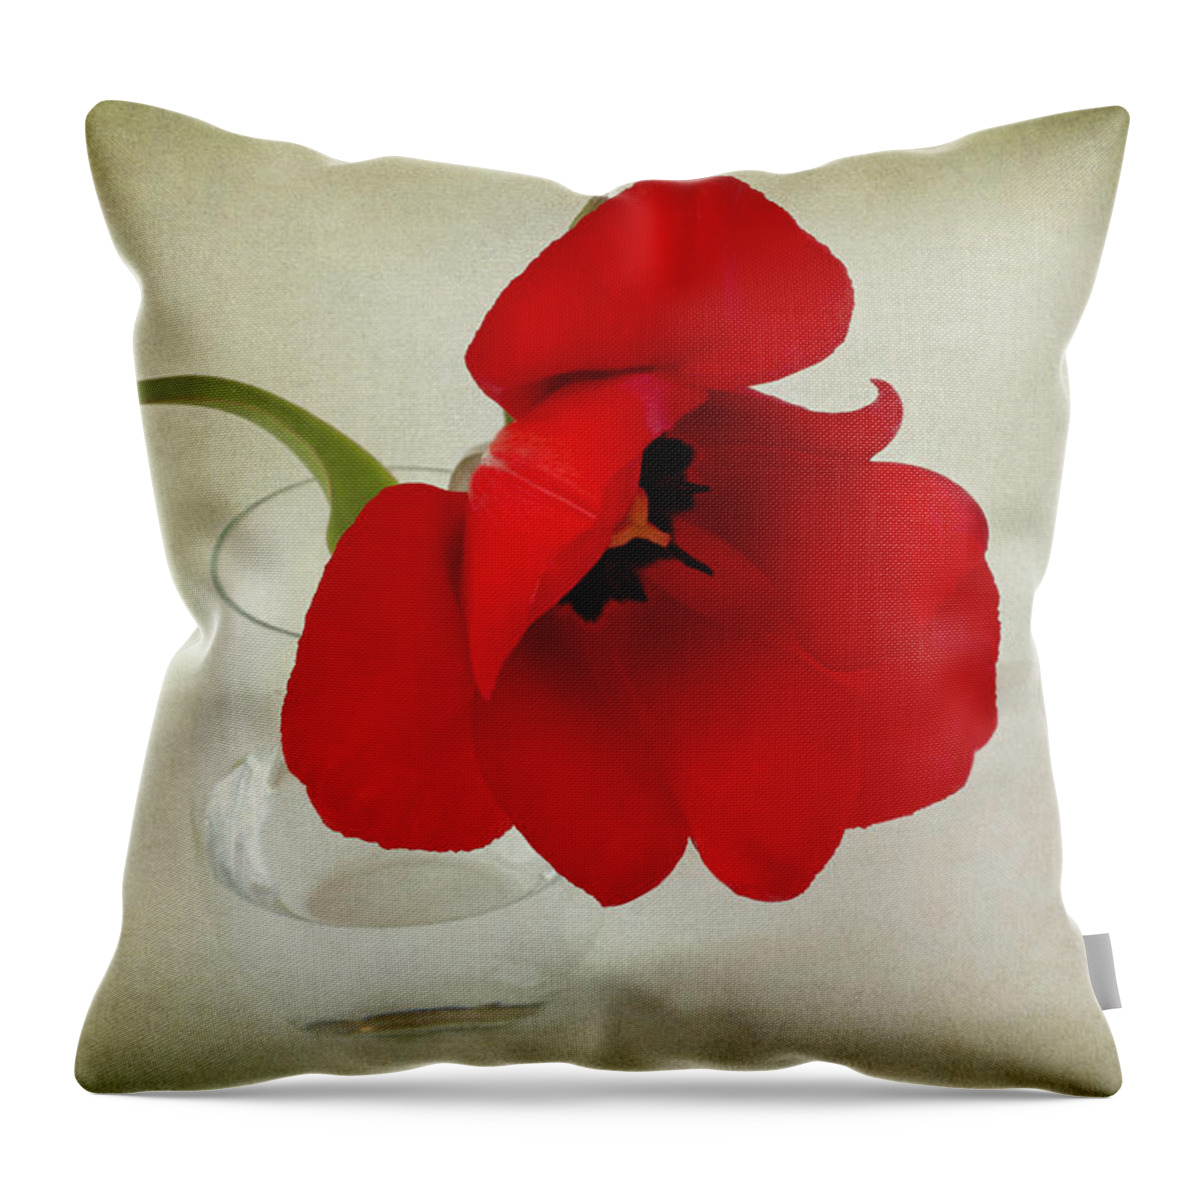 Red Tulip Throw Pillow featuring the photograph Carmen by Marina Kojukhova